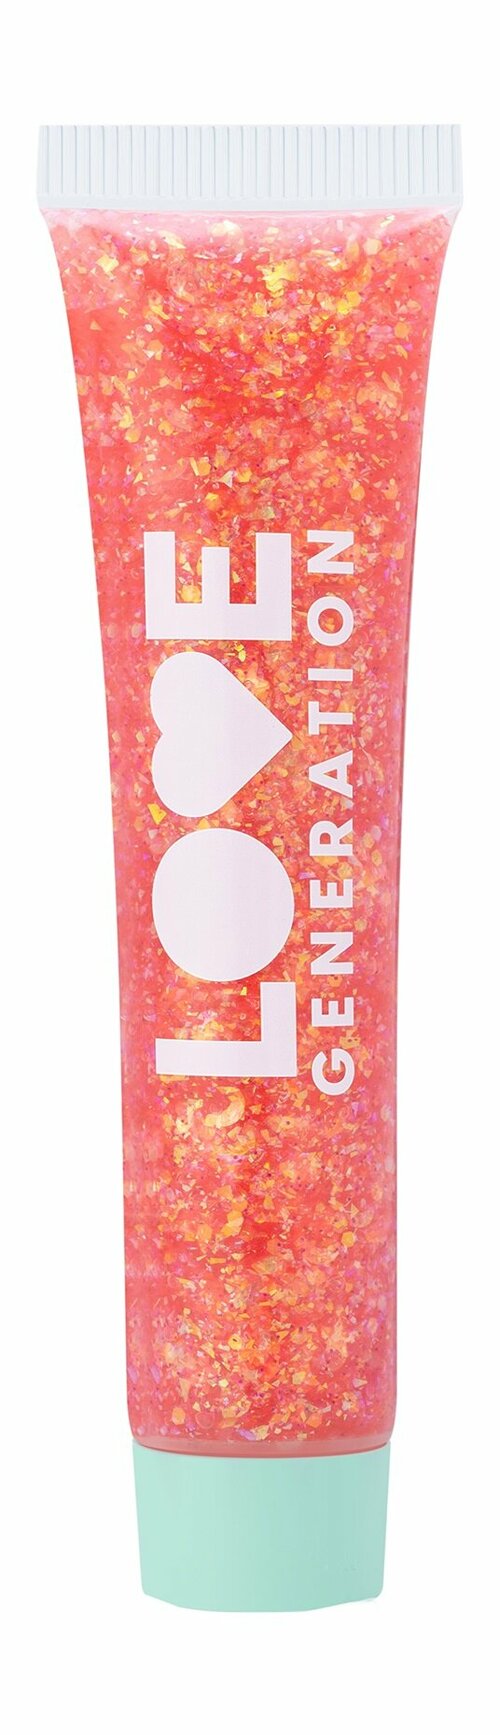 LOVE GENERATION Глиттер-гель для лица We love glitter, 15 мл, 06 Оранжево-розовый